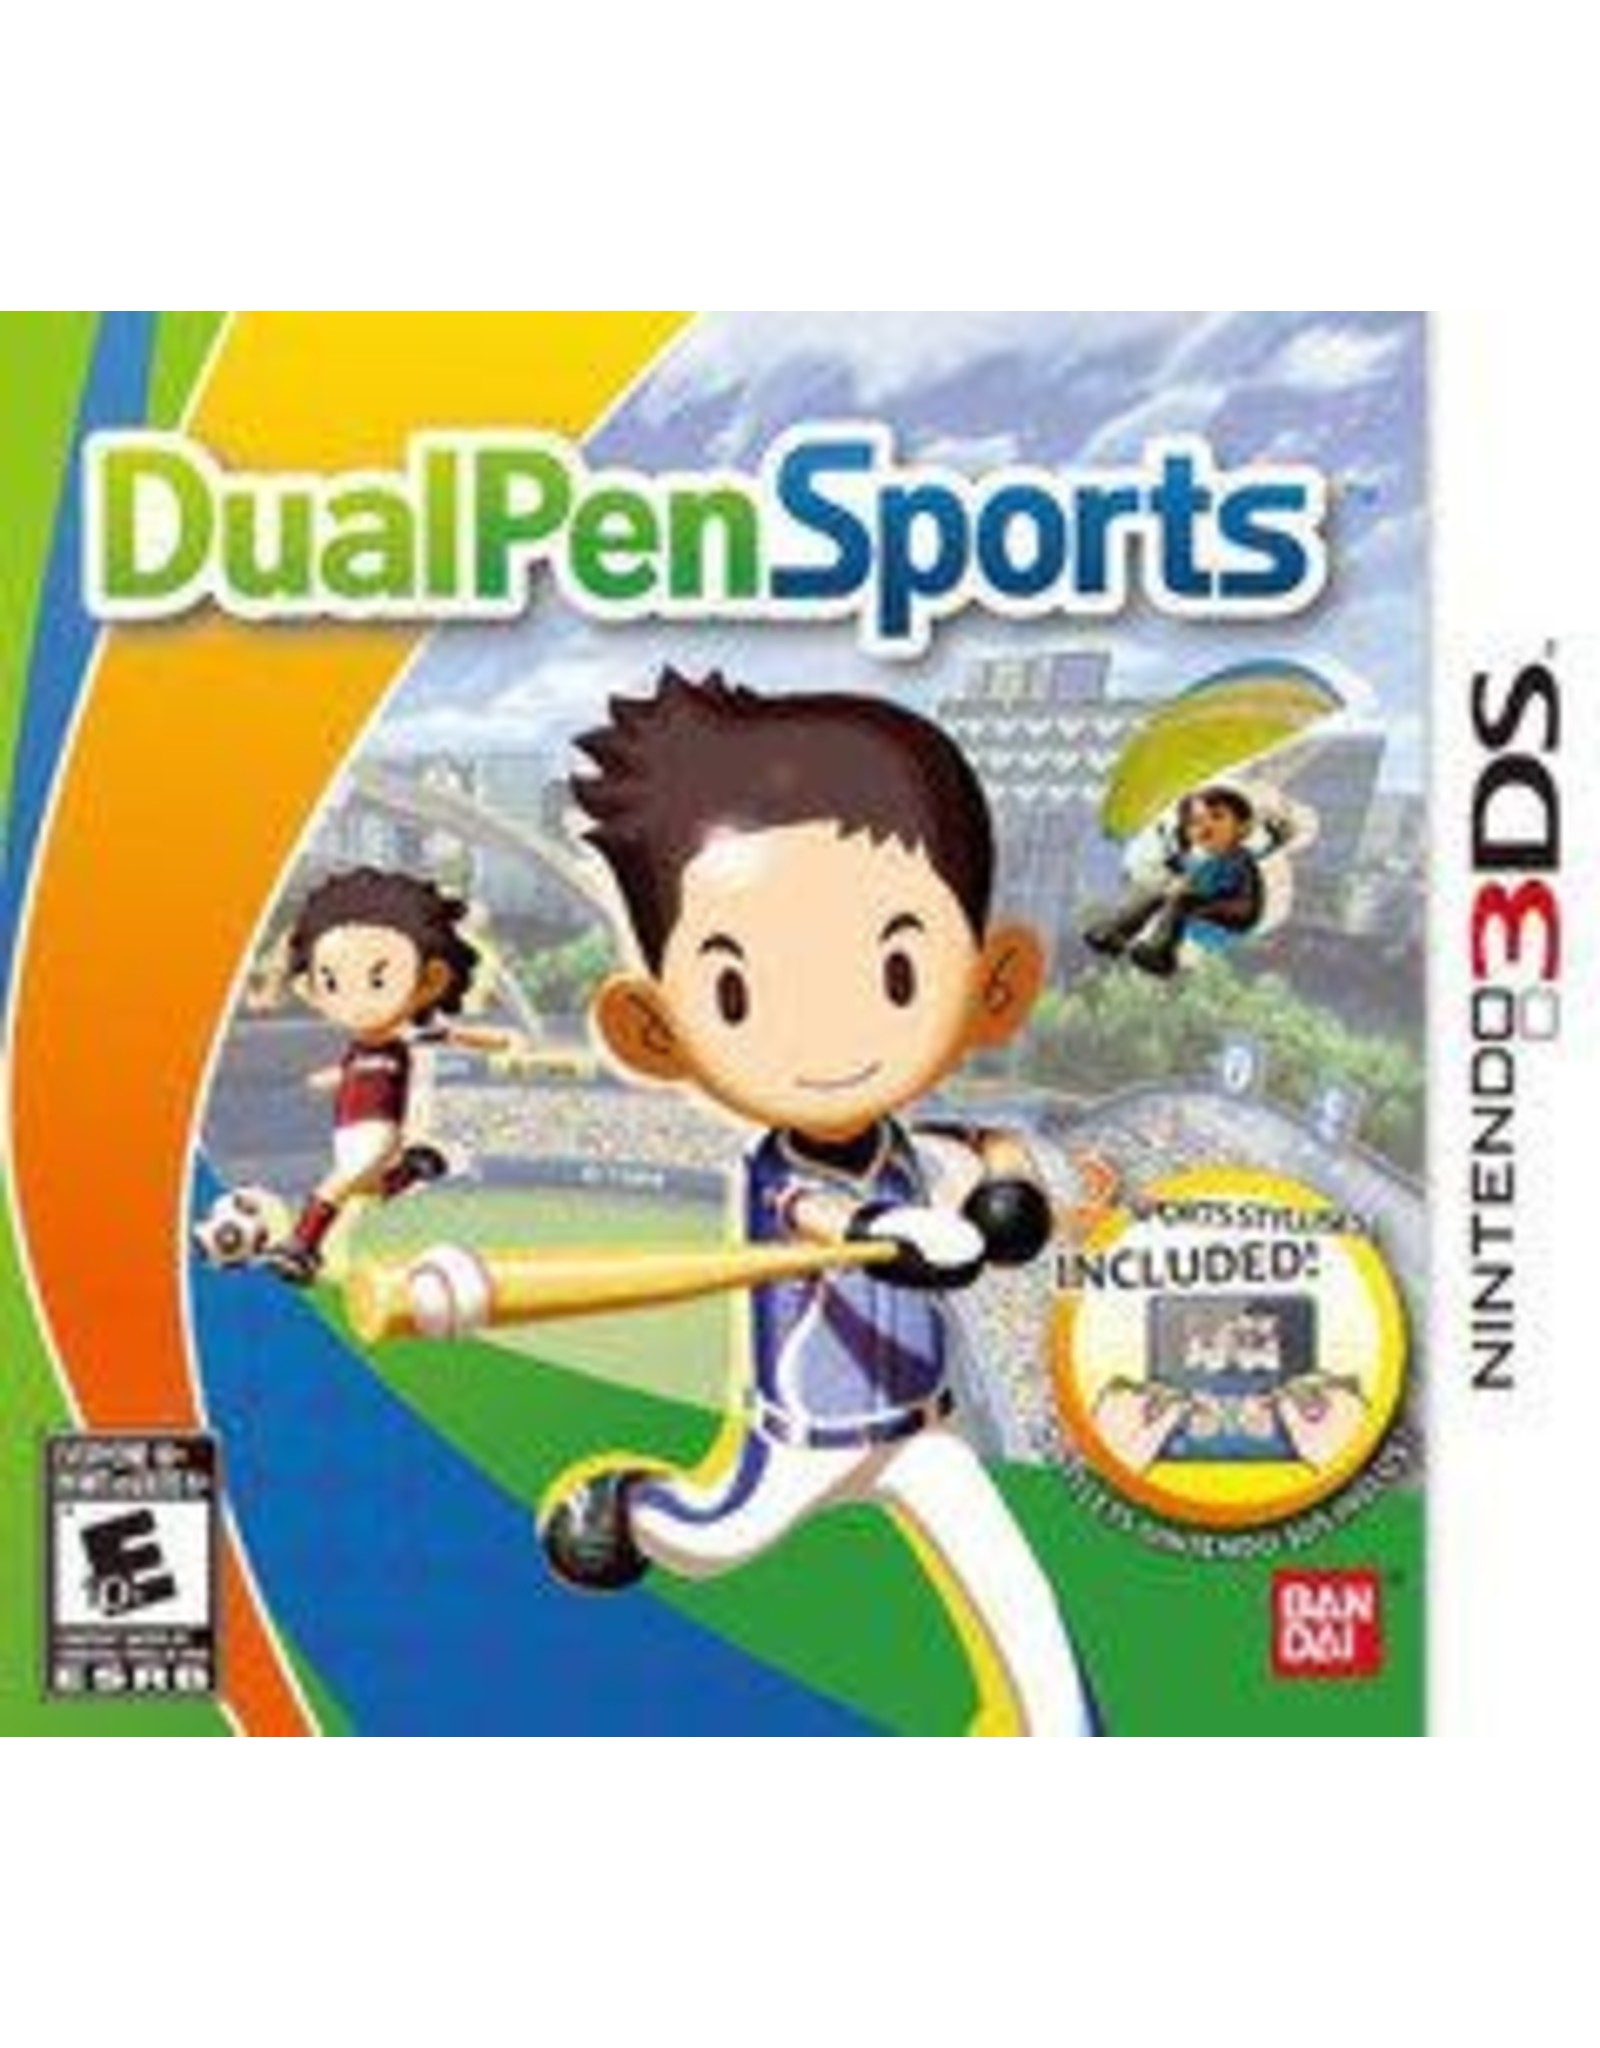 Nintendo 3DS DualPen Sports (CiB W/ x2 Stylus Pens)